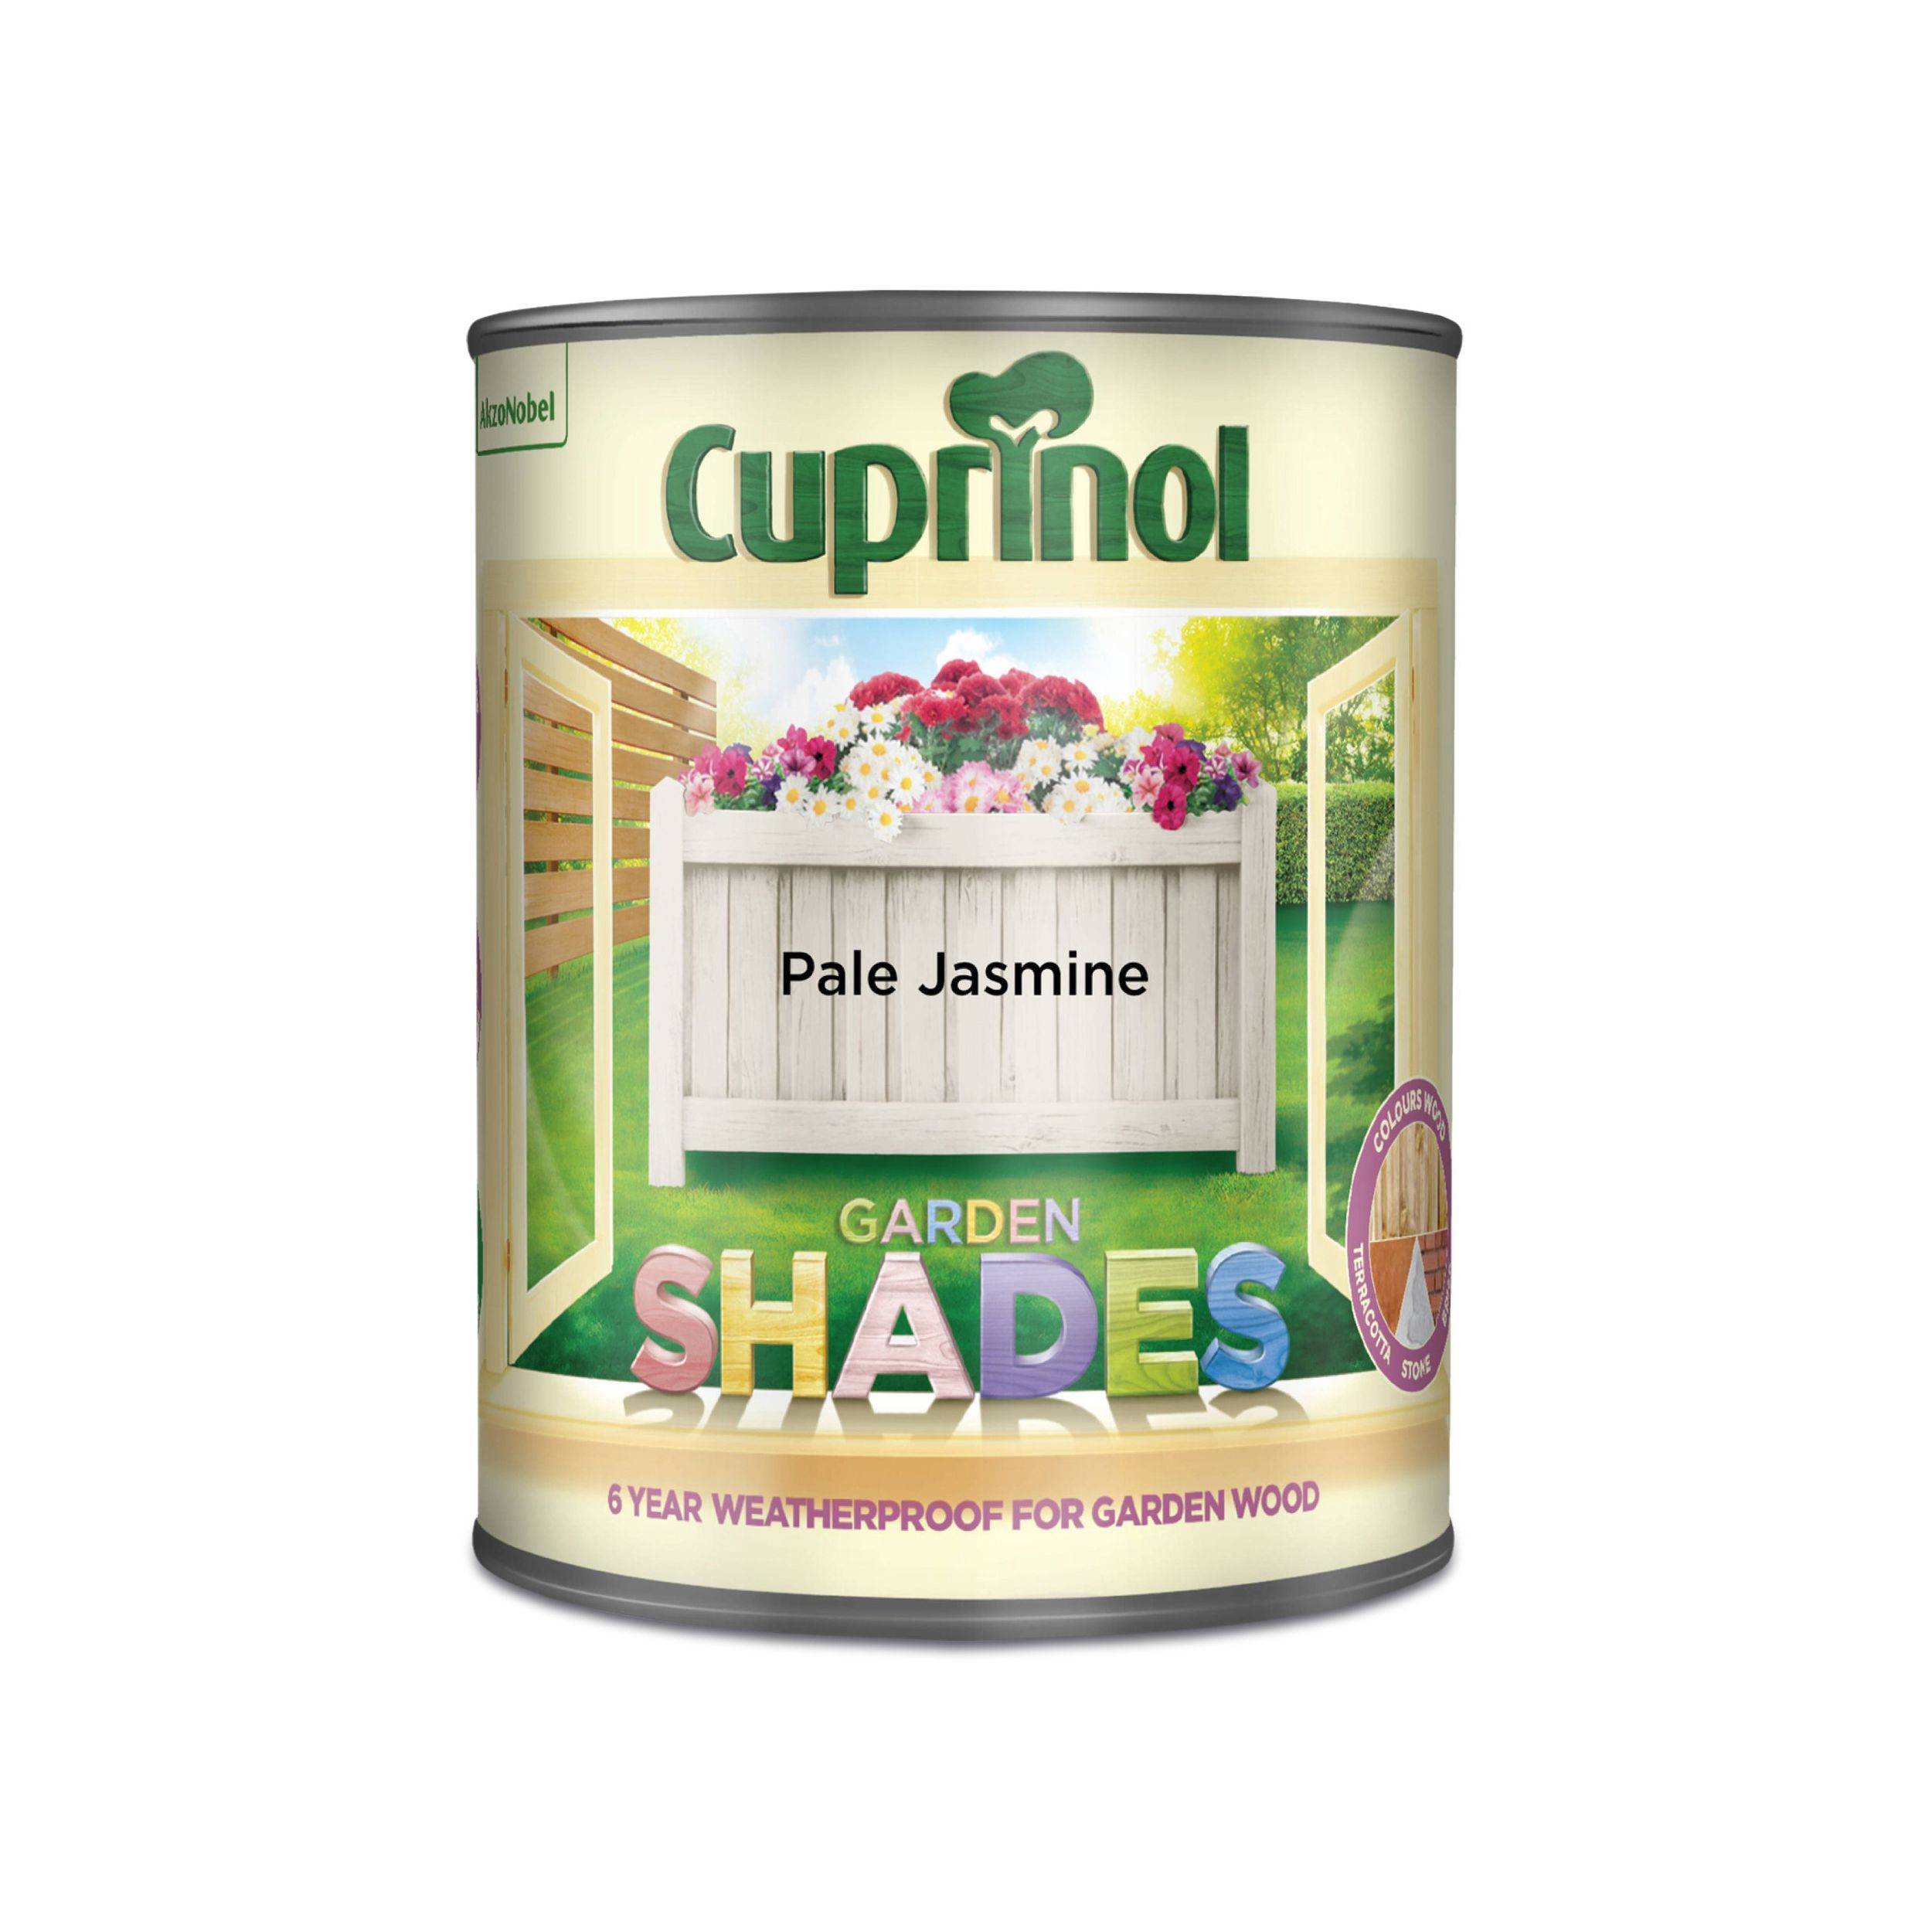 Cuprinol Garden shades Pale jasmine Matt Multi-surface Exterior Wood paint, 1L